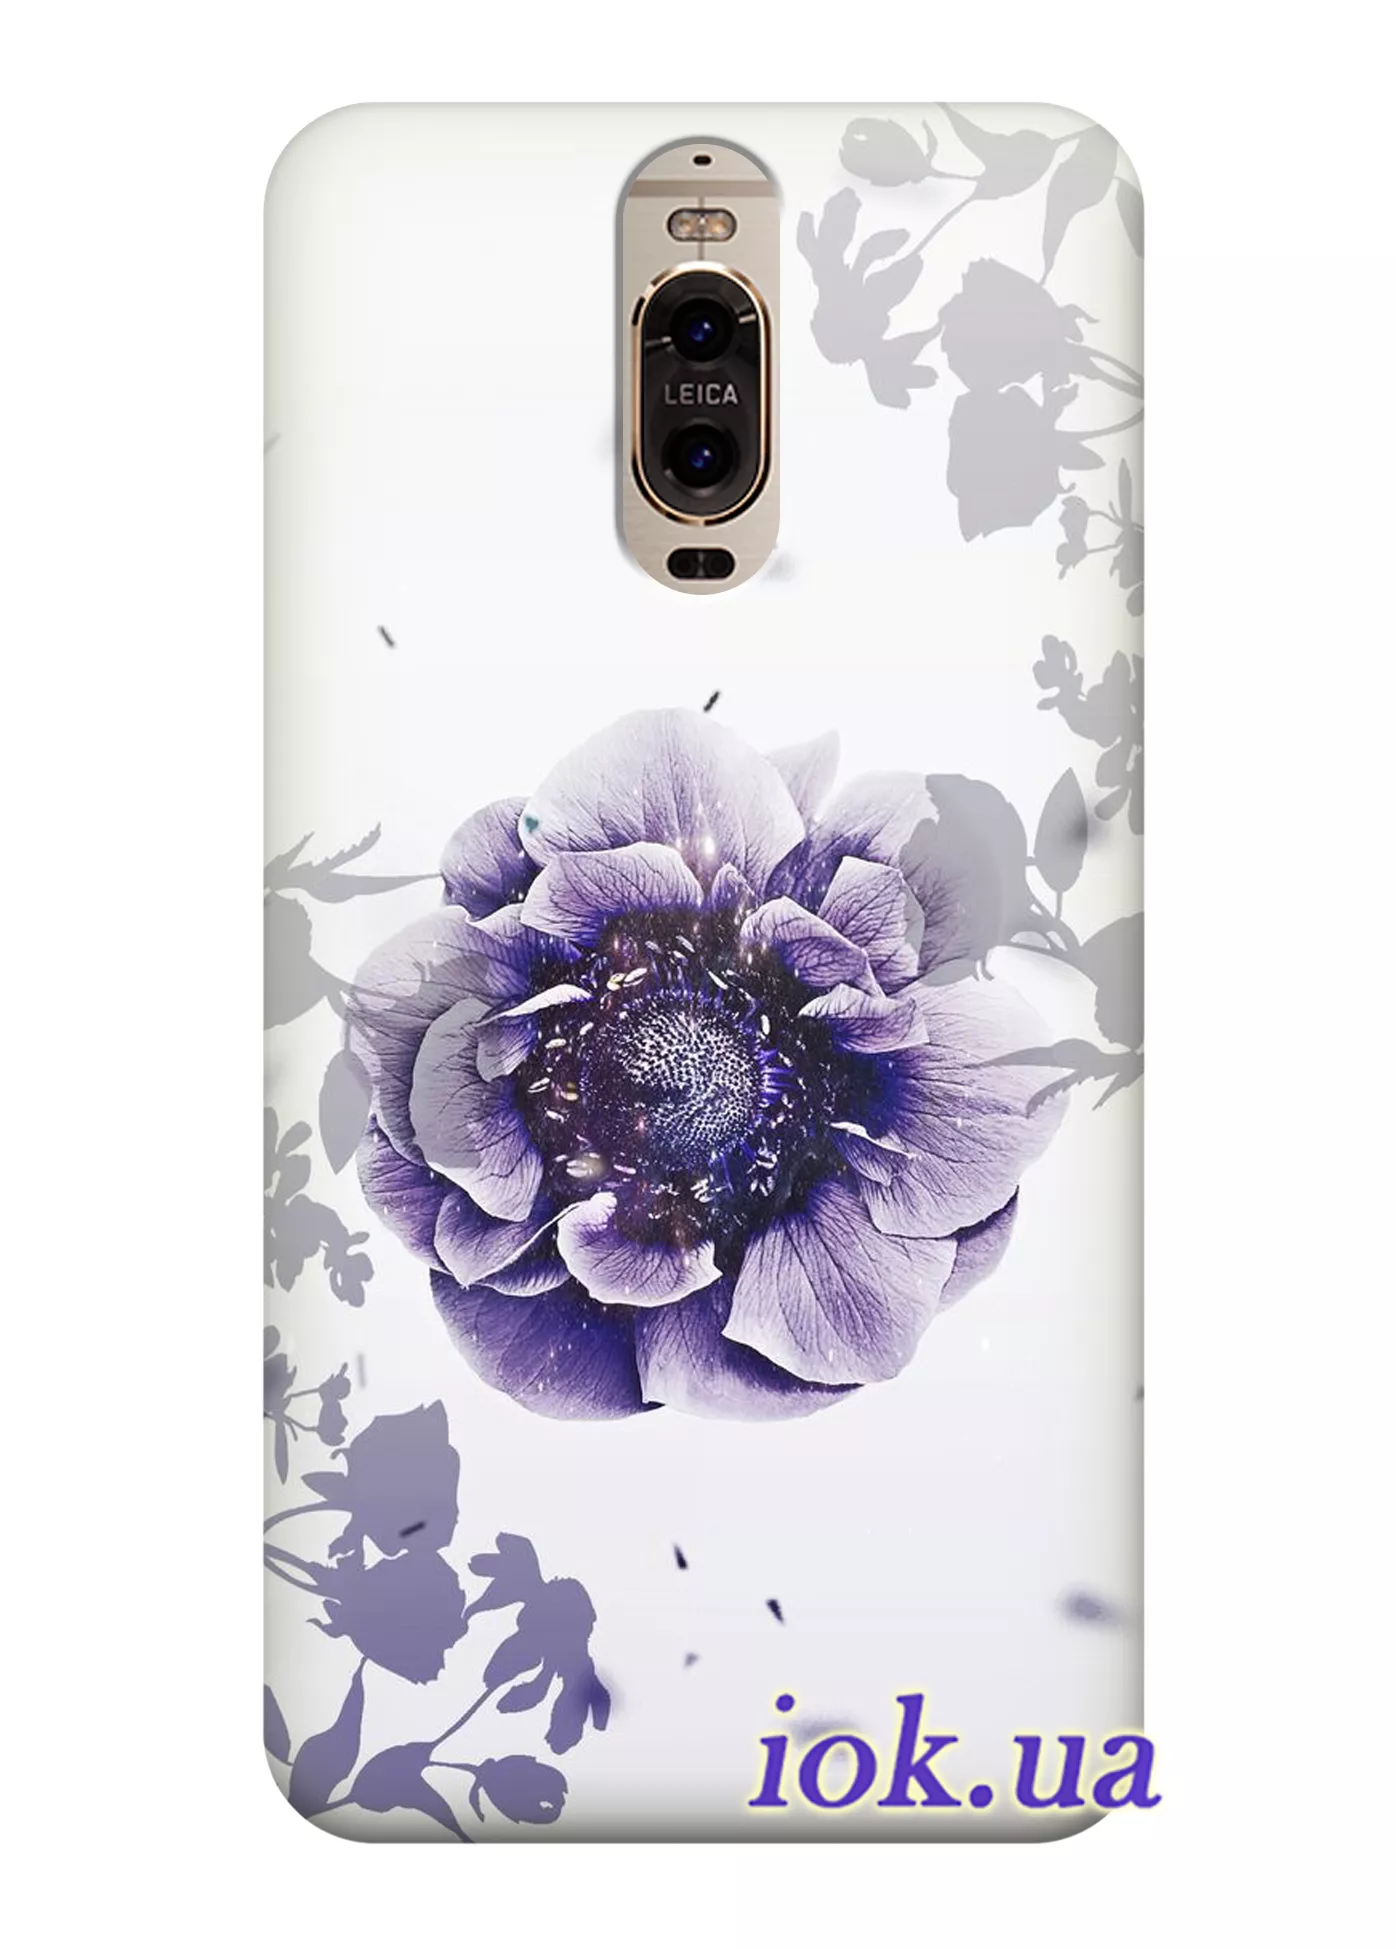 Чехол для Huawei Mate 9 Pro - Волшебный цветок